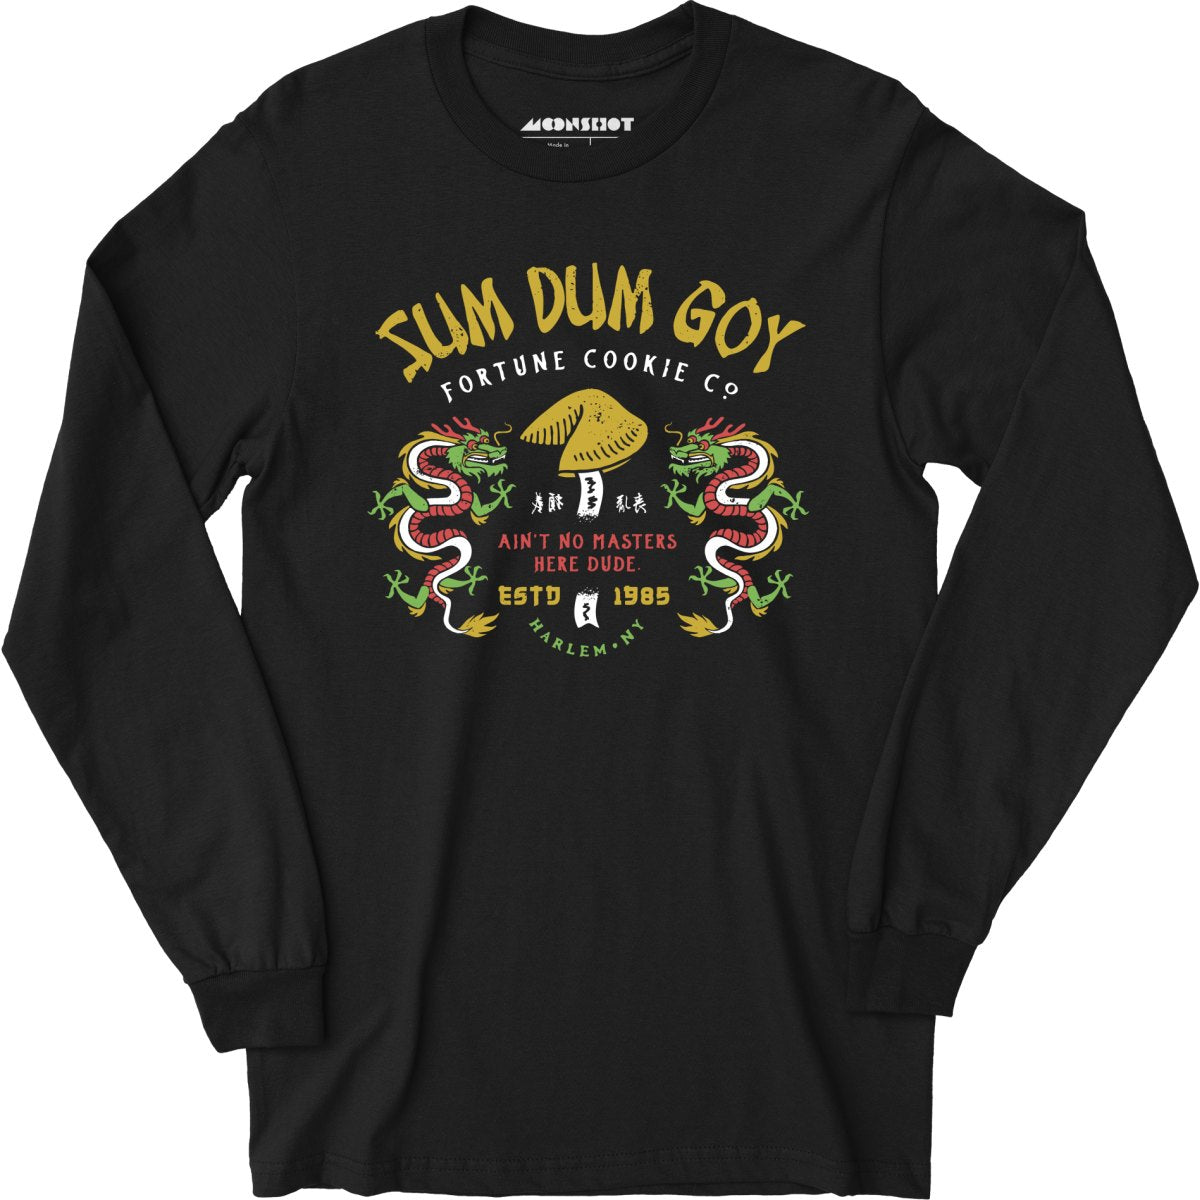 Sum Dum Goy Fortune Cookie Co. - Last Dragon - Long Sleeve T-Shirt